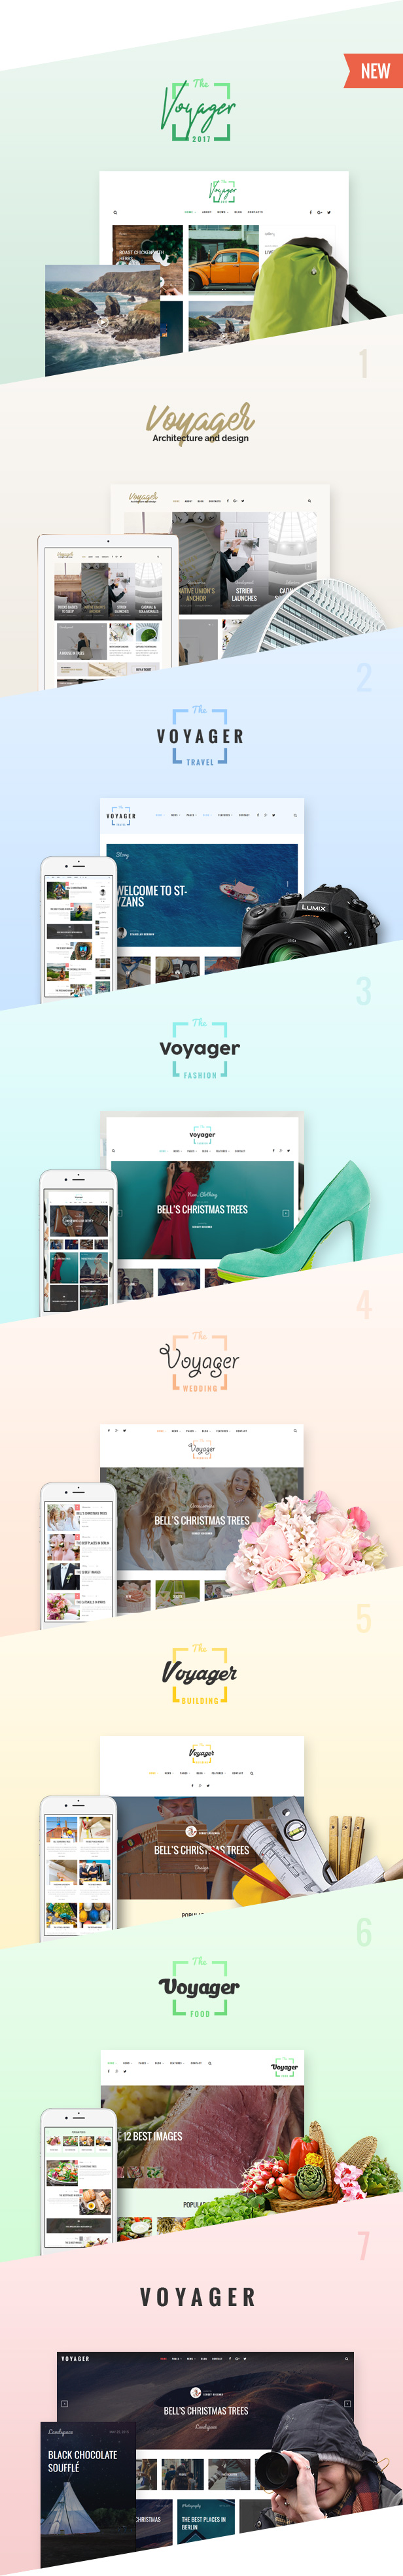 Voyager — Creative Blog WordPress Theme - 5